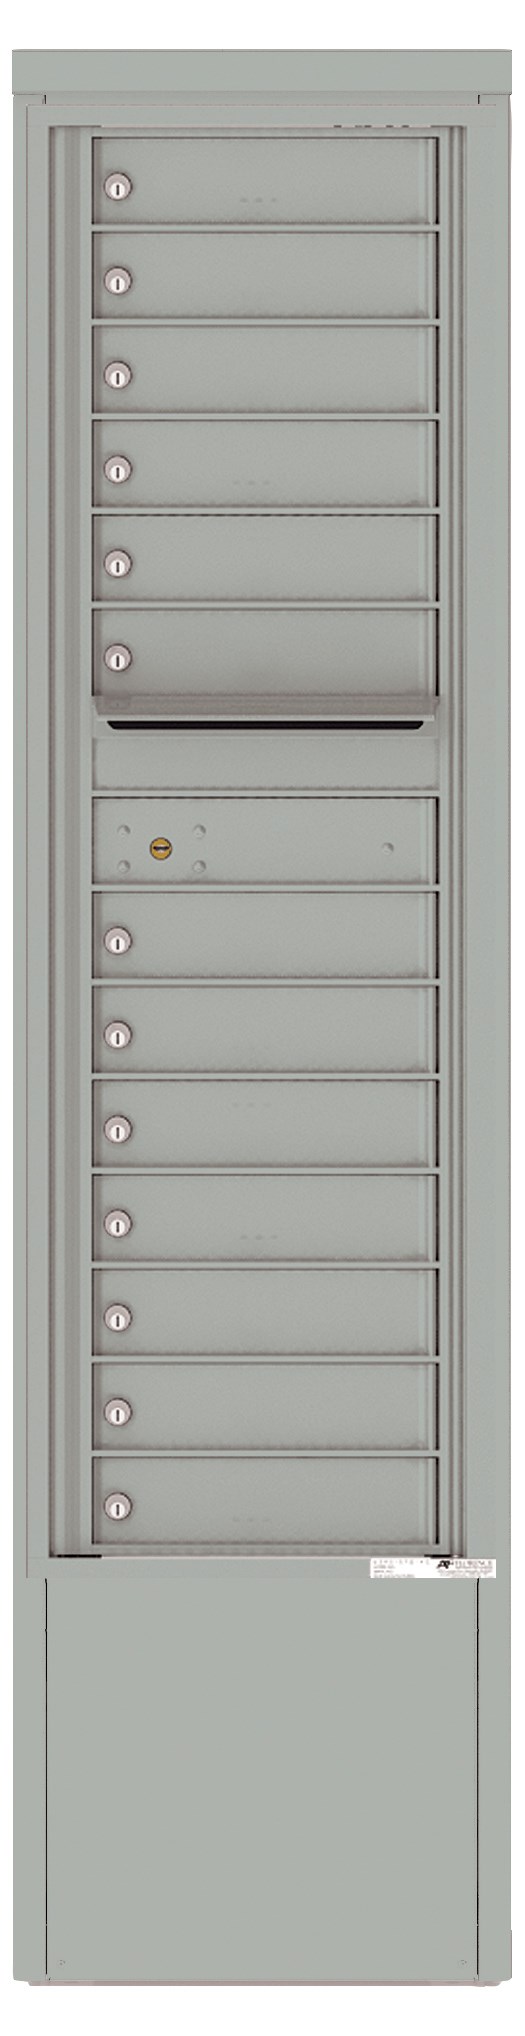 4C15S-13-D 4C Horizontal Depot Mailbox Silver Speck